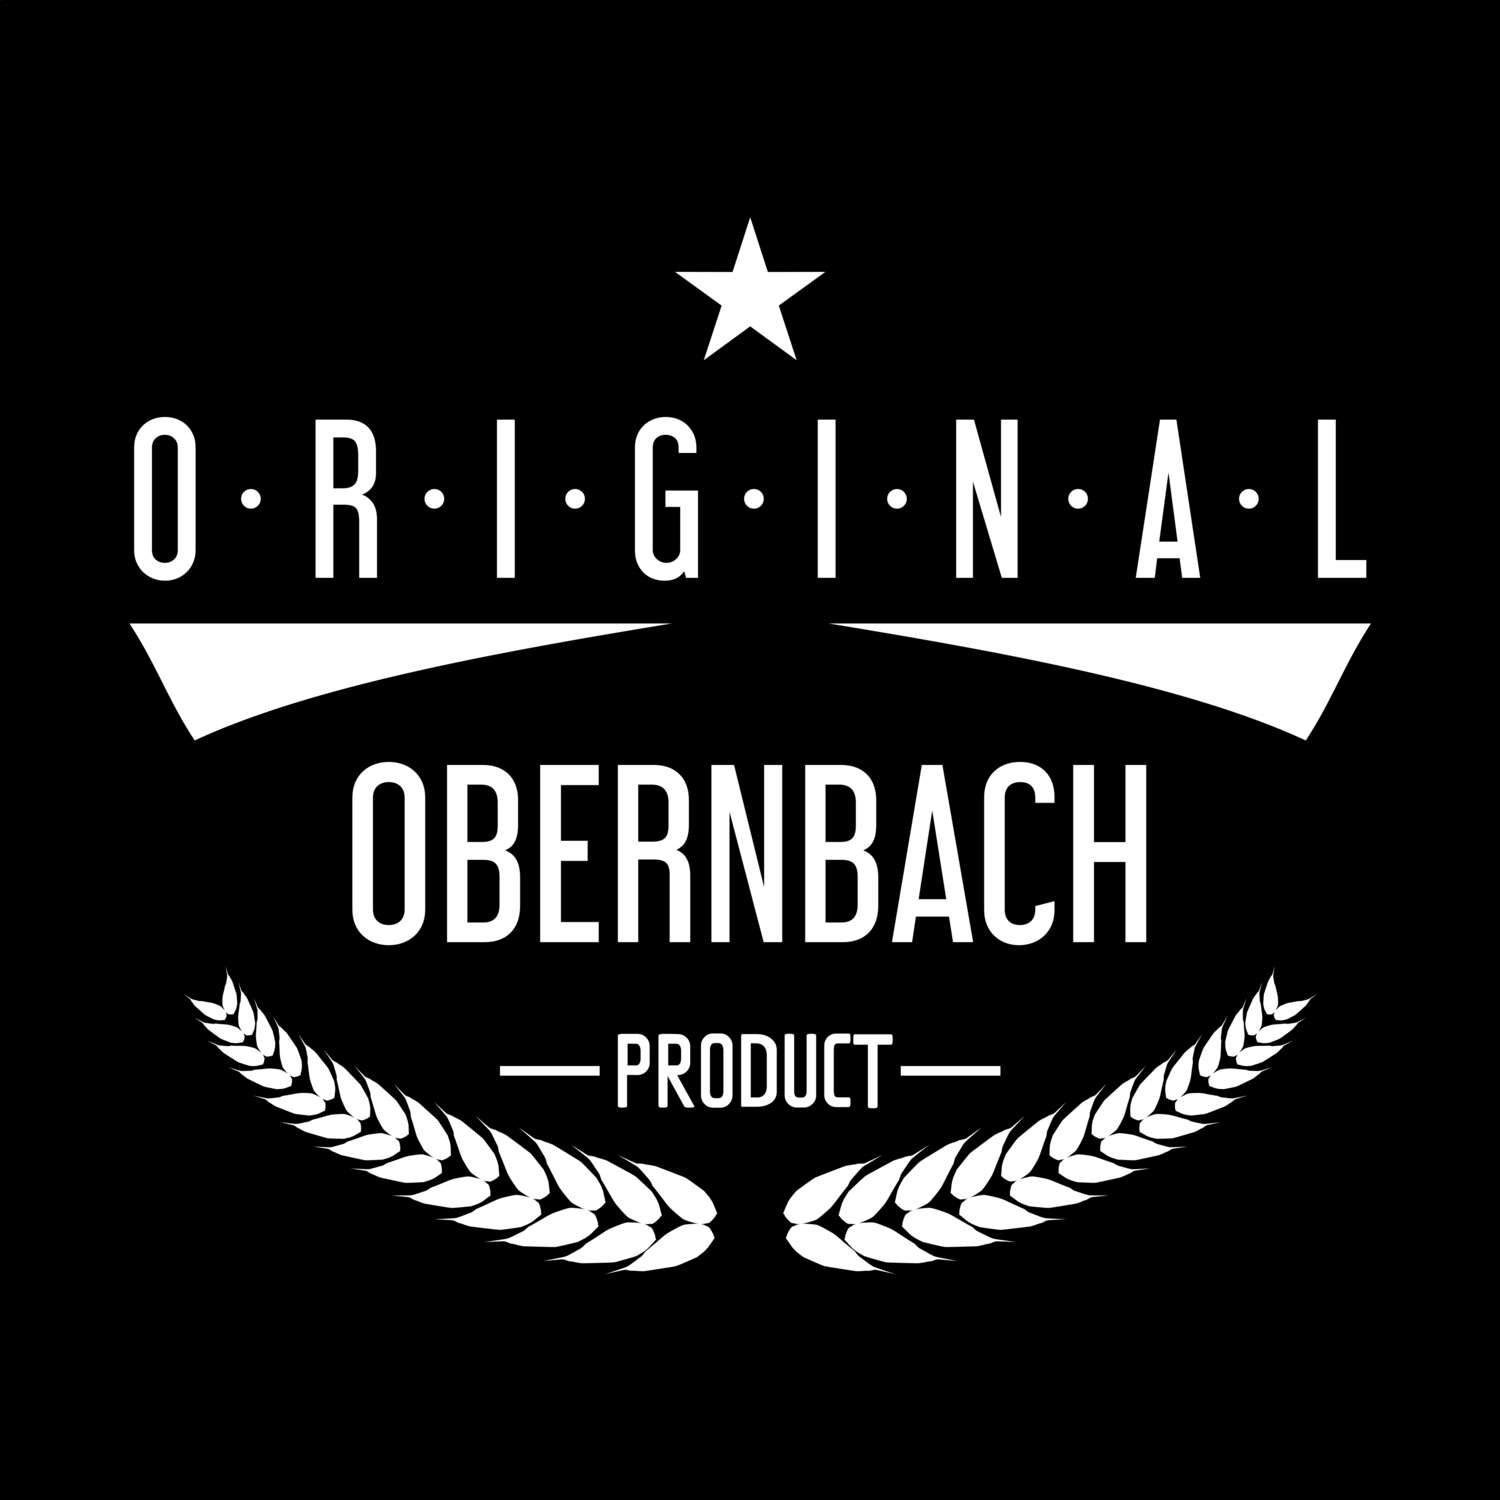 Obernbach T-Shirt »Original Product«